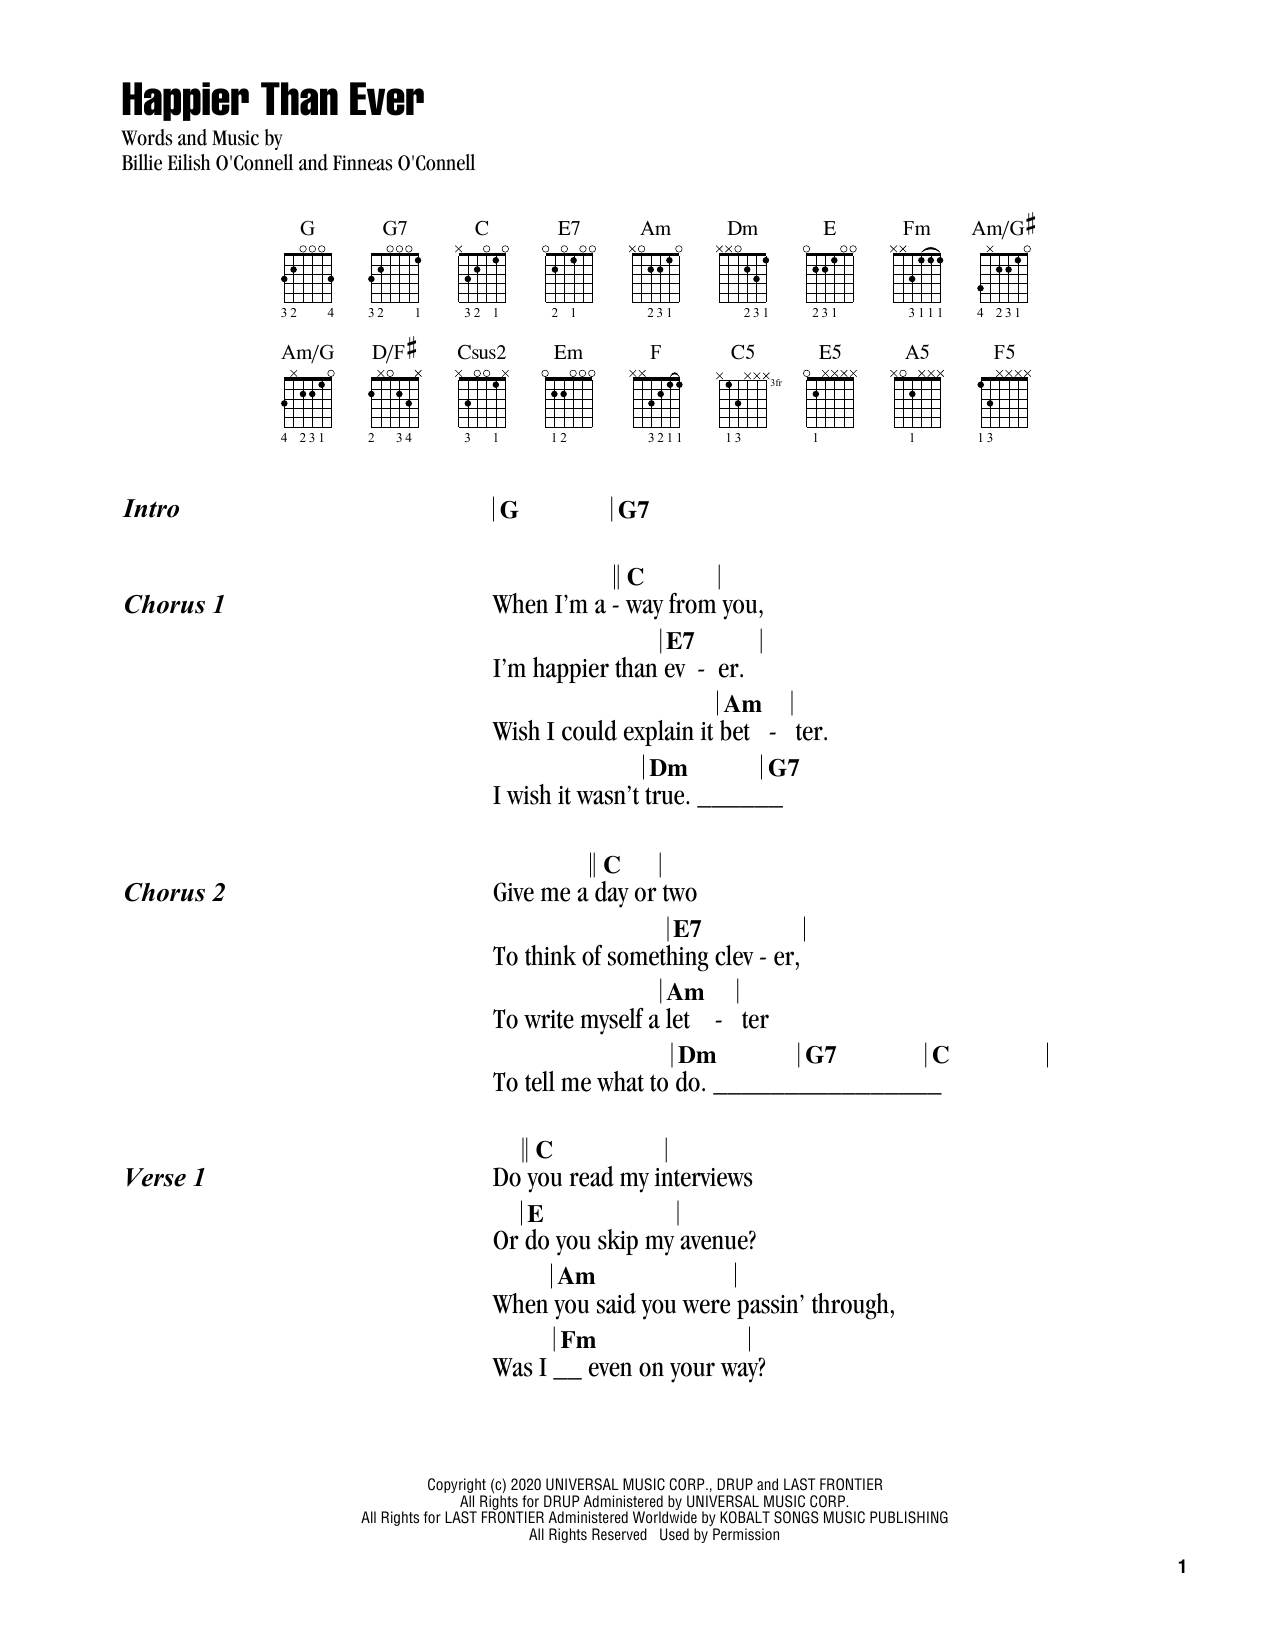 Billie Eilish Happier Than Ever Sheet Music Notes & Chords for Guitar Chords/Lyrics - Download or Print PDF